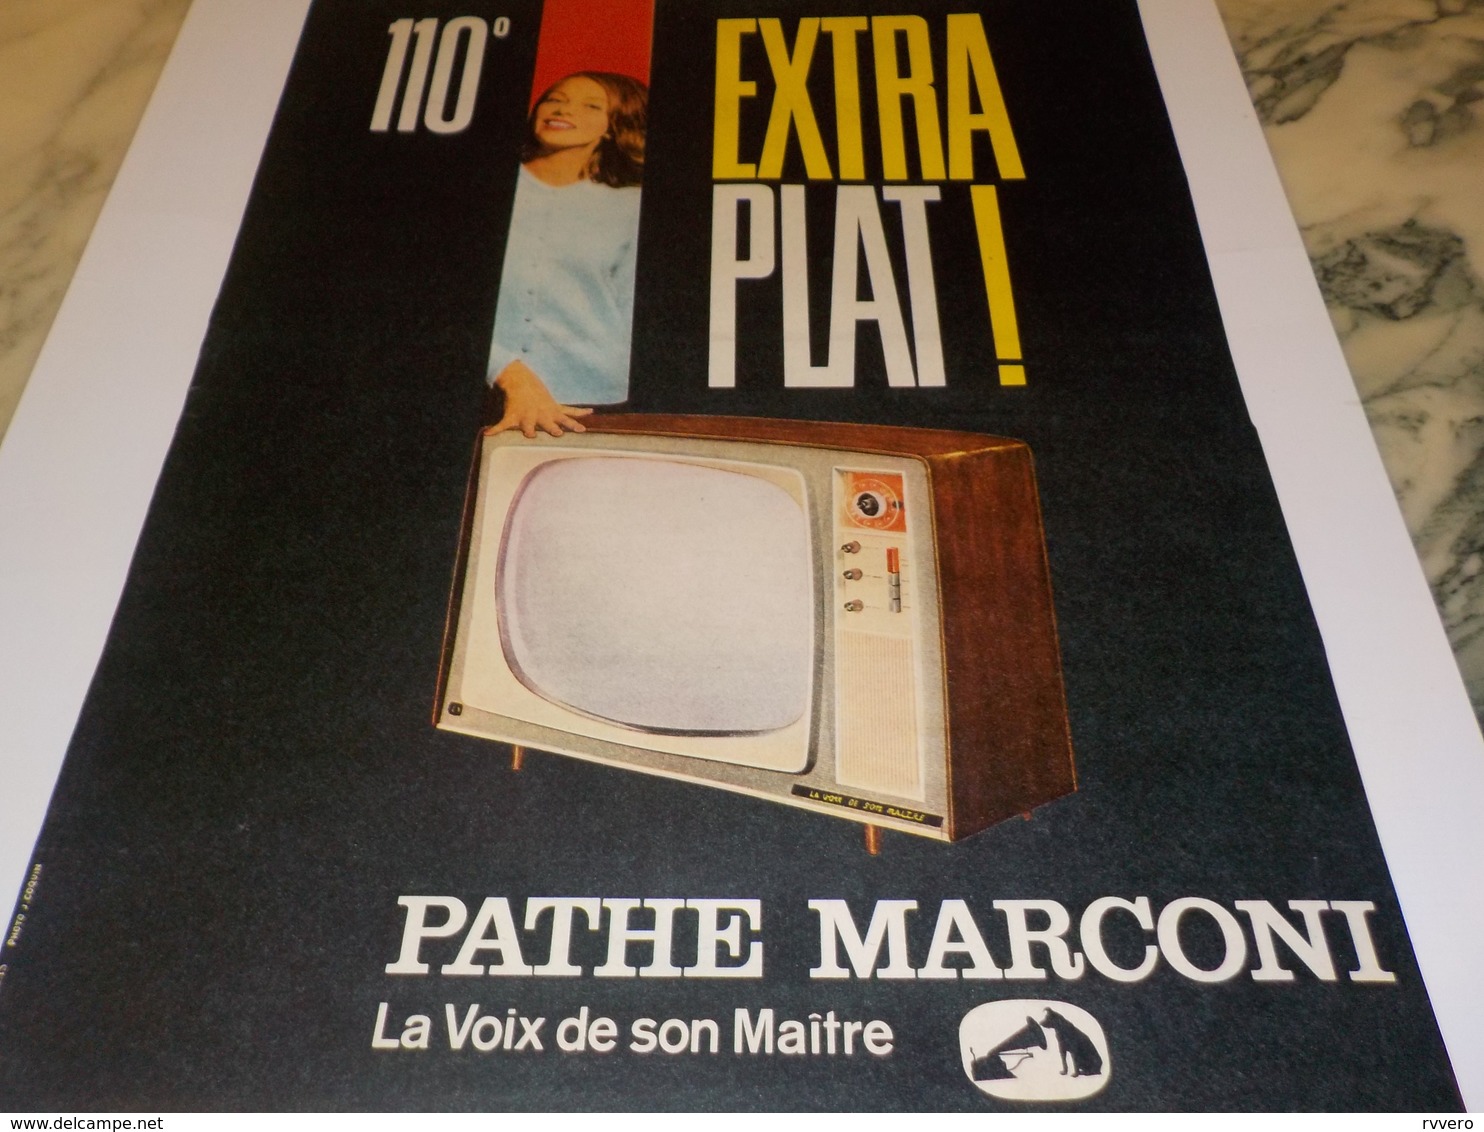 ANCIENNE PUBLICITE EXTRA PLAT  PATHE MARCONI 1960 - Fernsehgeräte